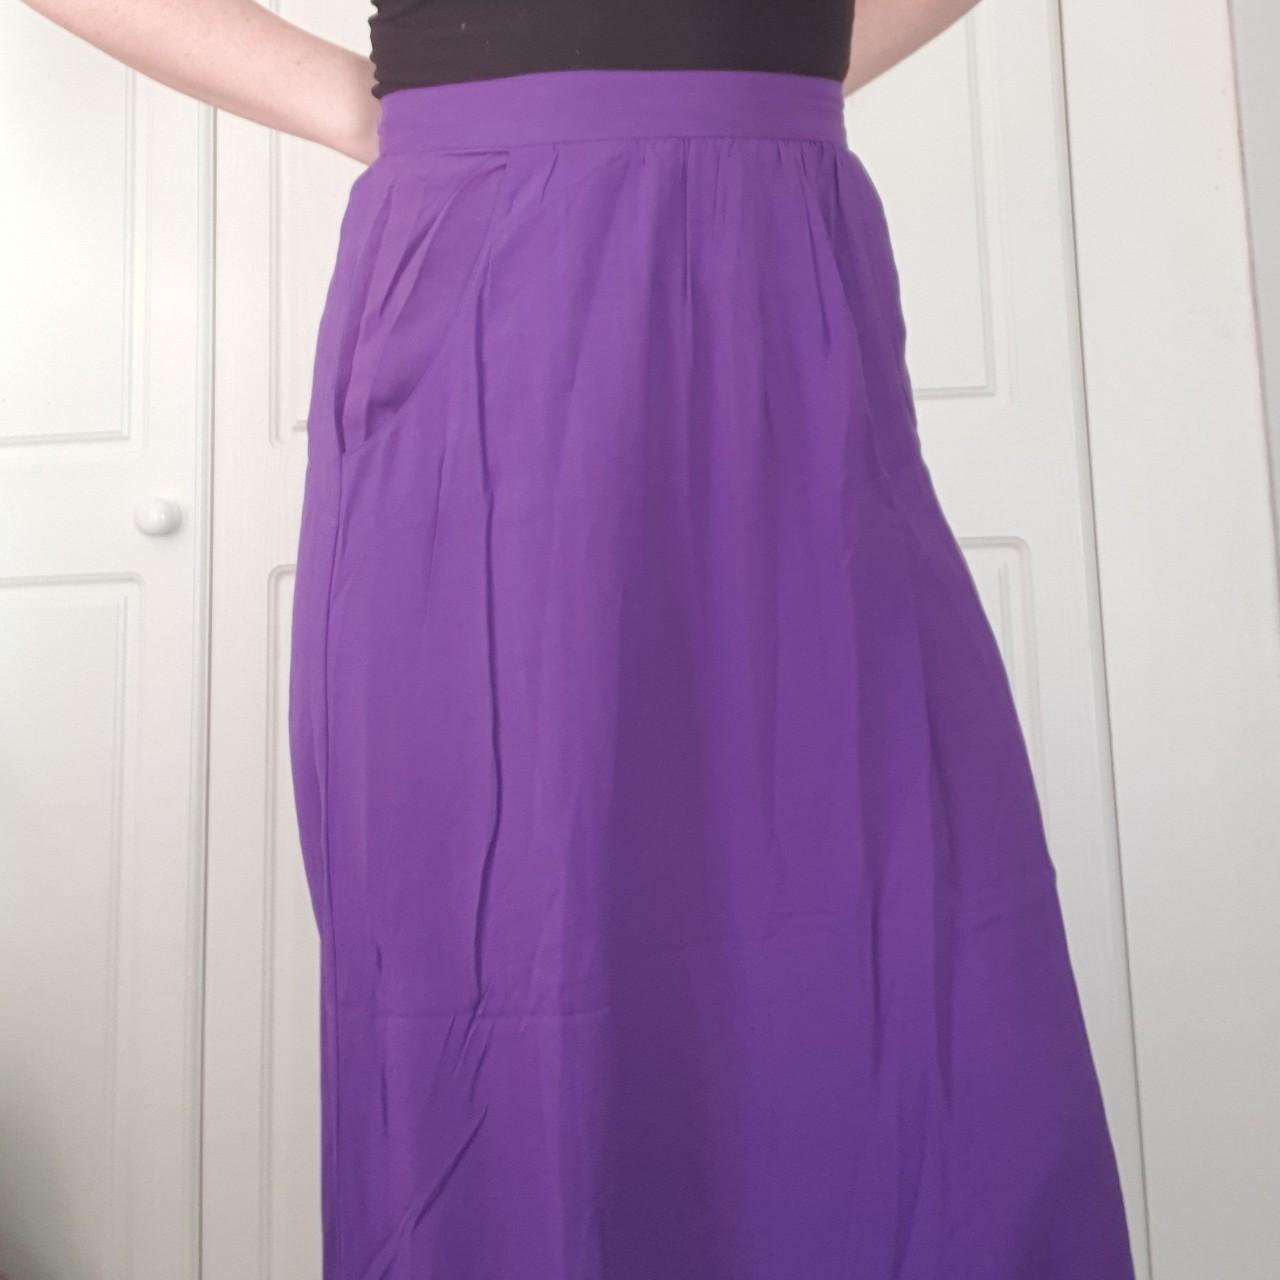 New Look Women's Purple Skirt